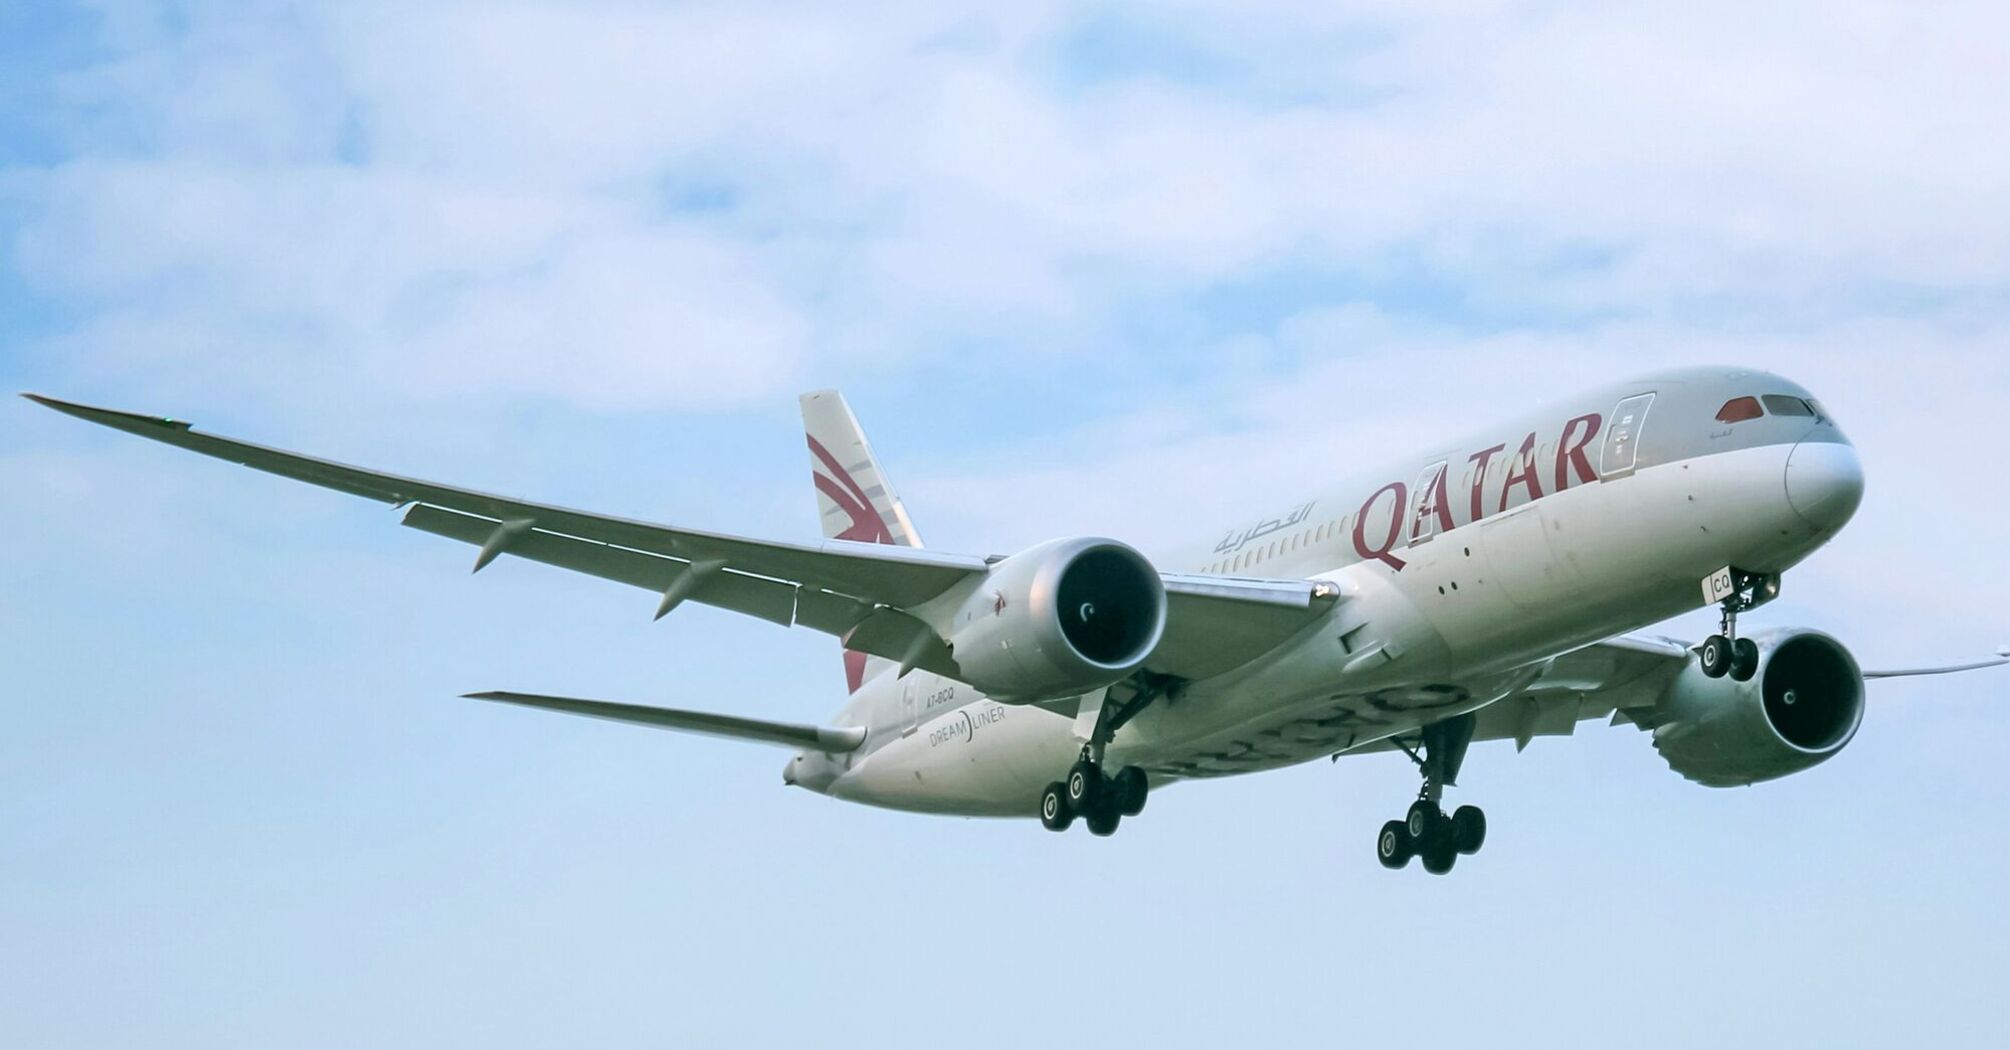 Qatar Airways plane flying in the sky